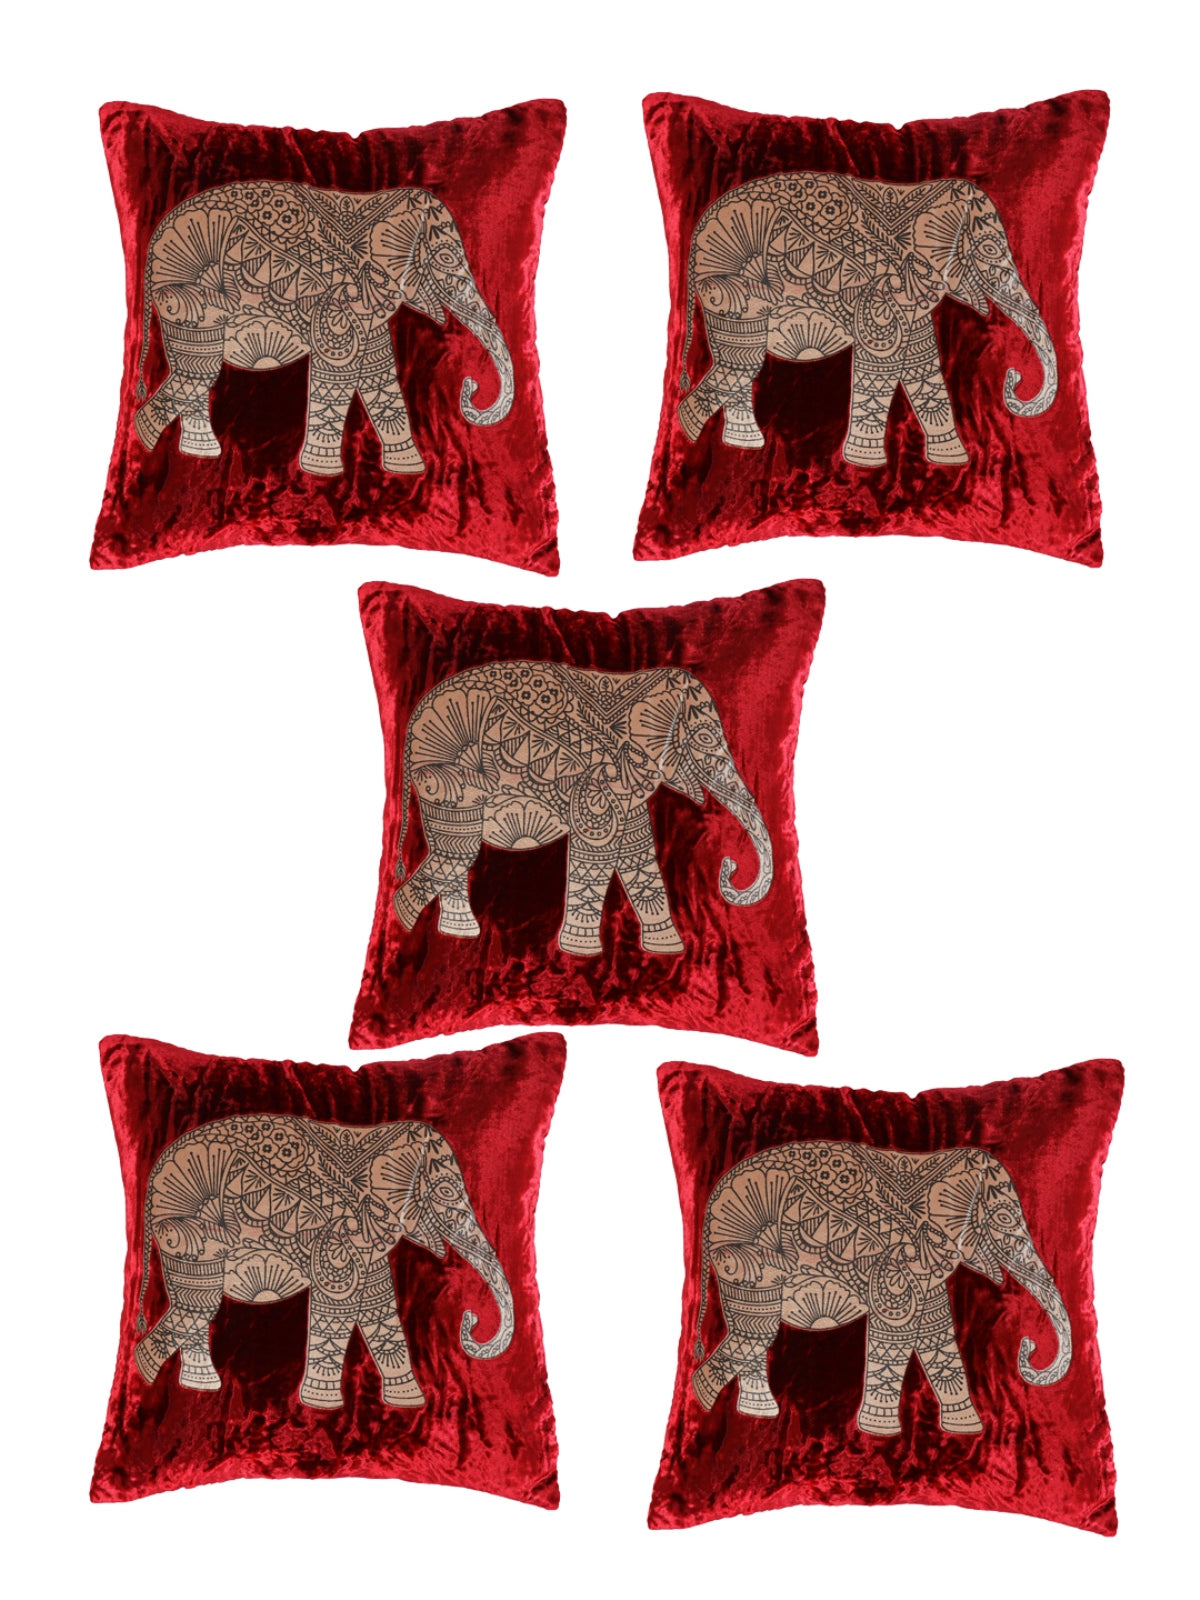 Maroon Set of 5 Elephant Printed Velvet Square Cushion Covers